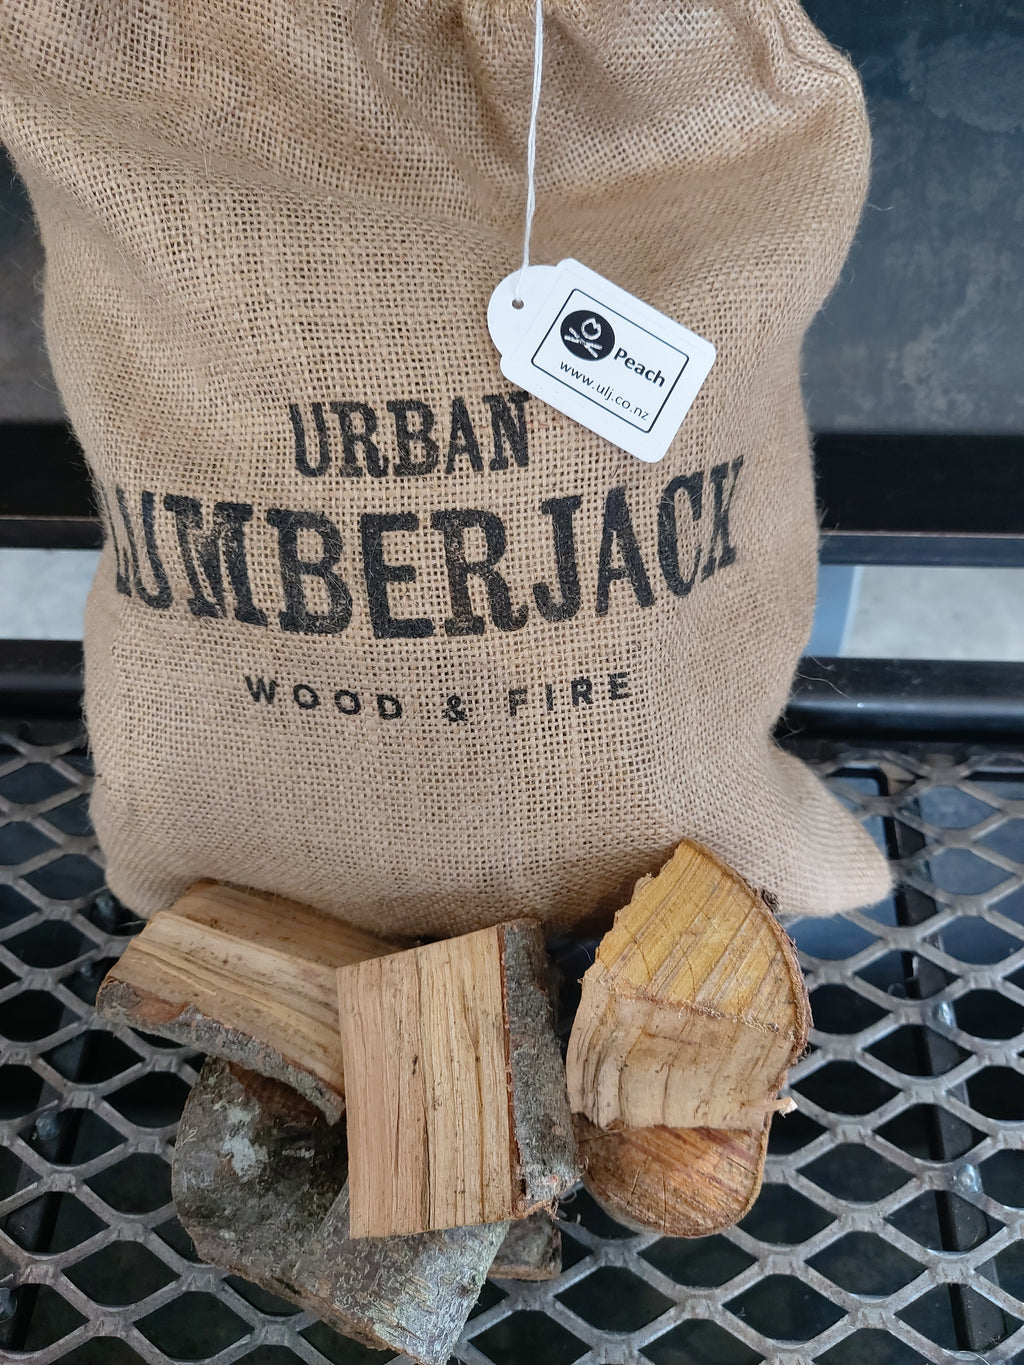 Peach Wood Chunks 3kg by Urban Lumberjack